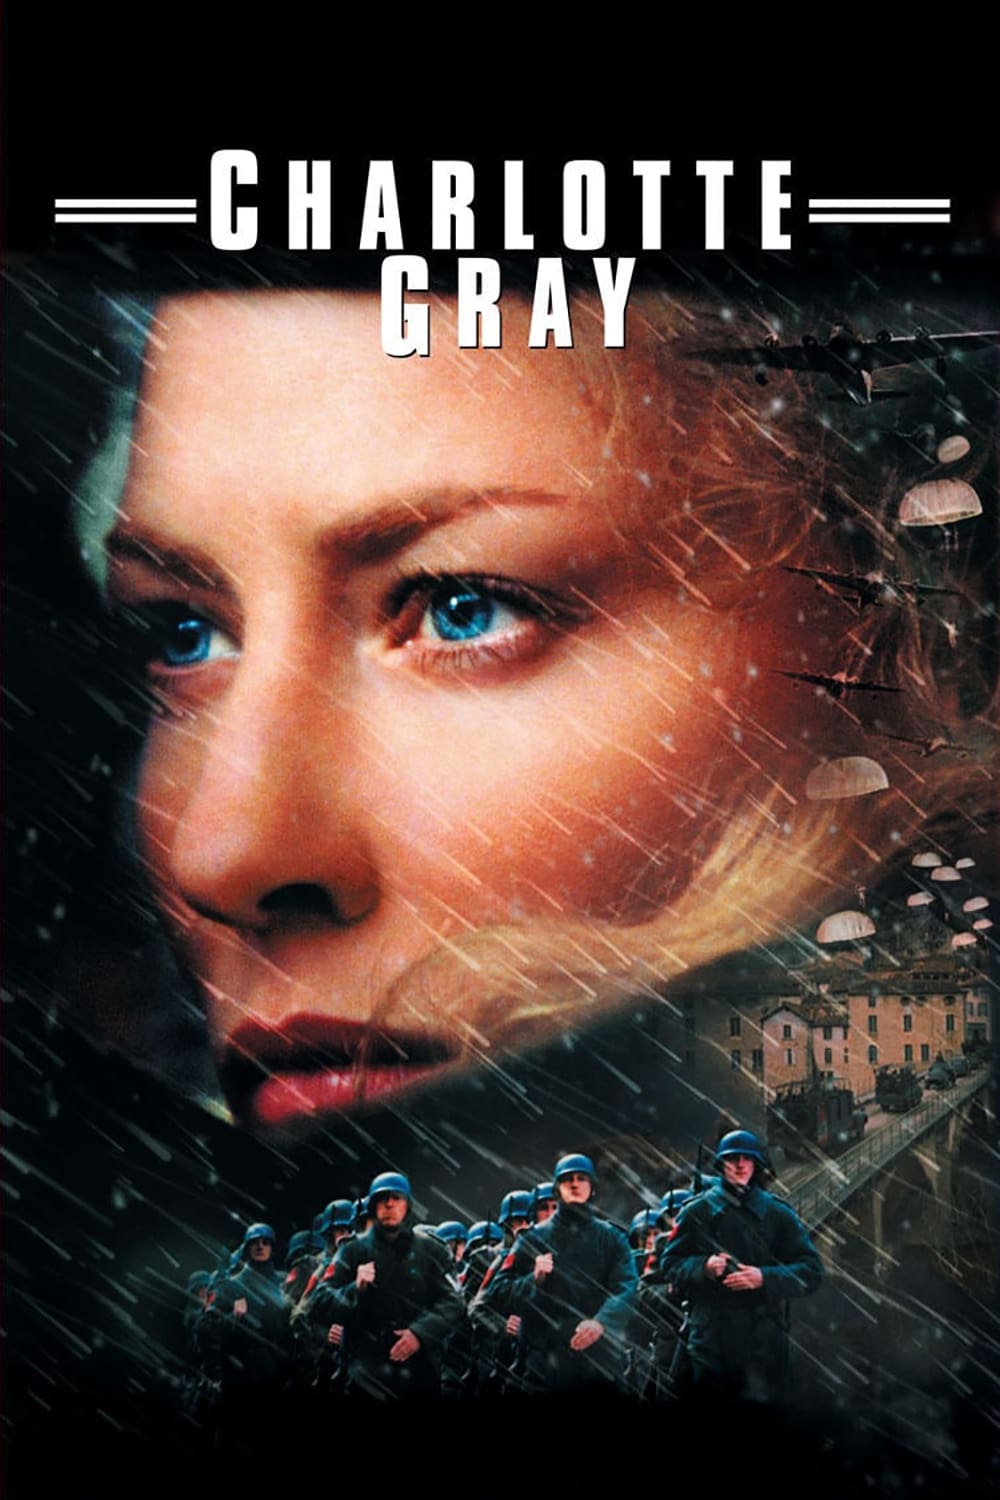 Charlotte Gray [HD] (2001)